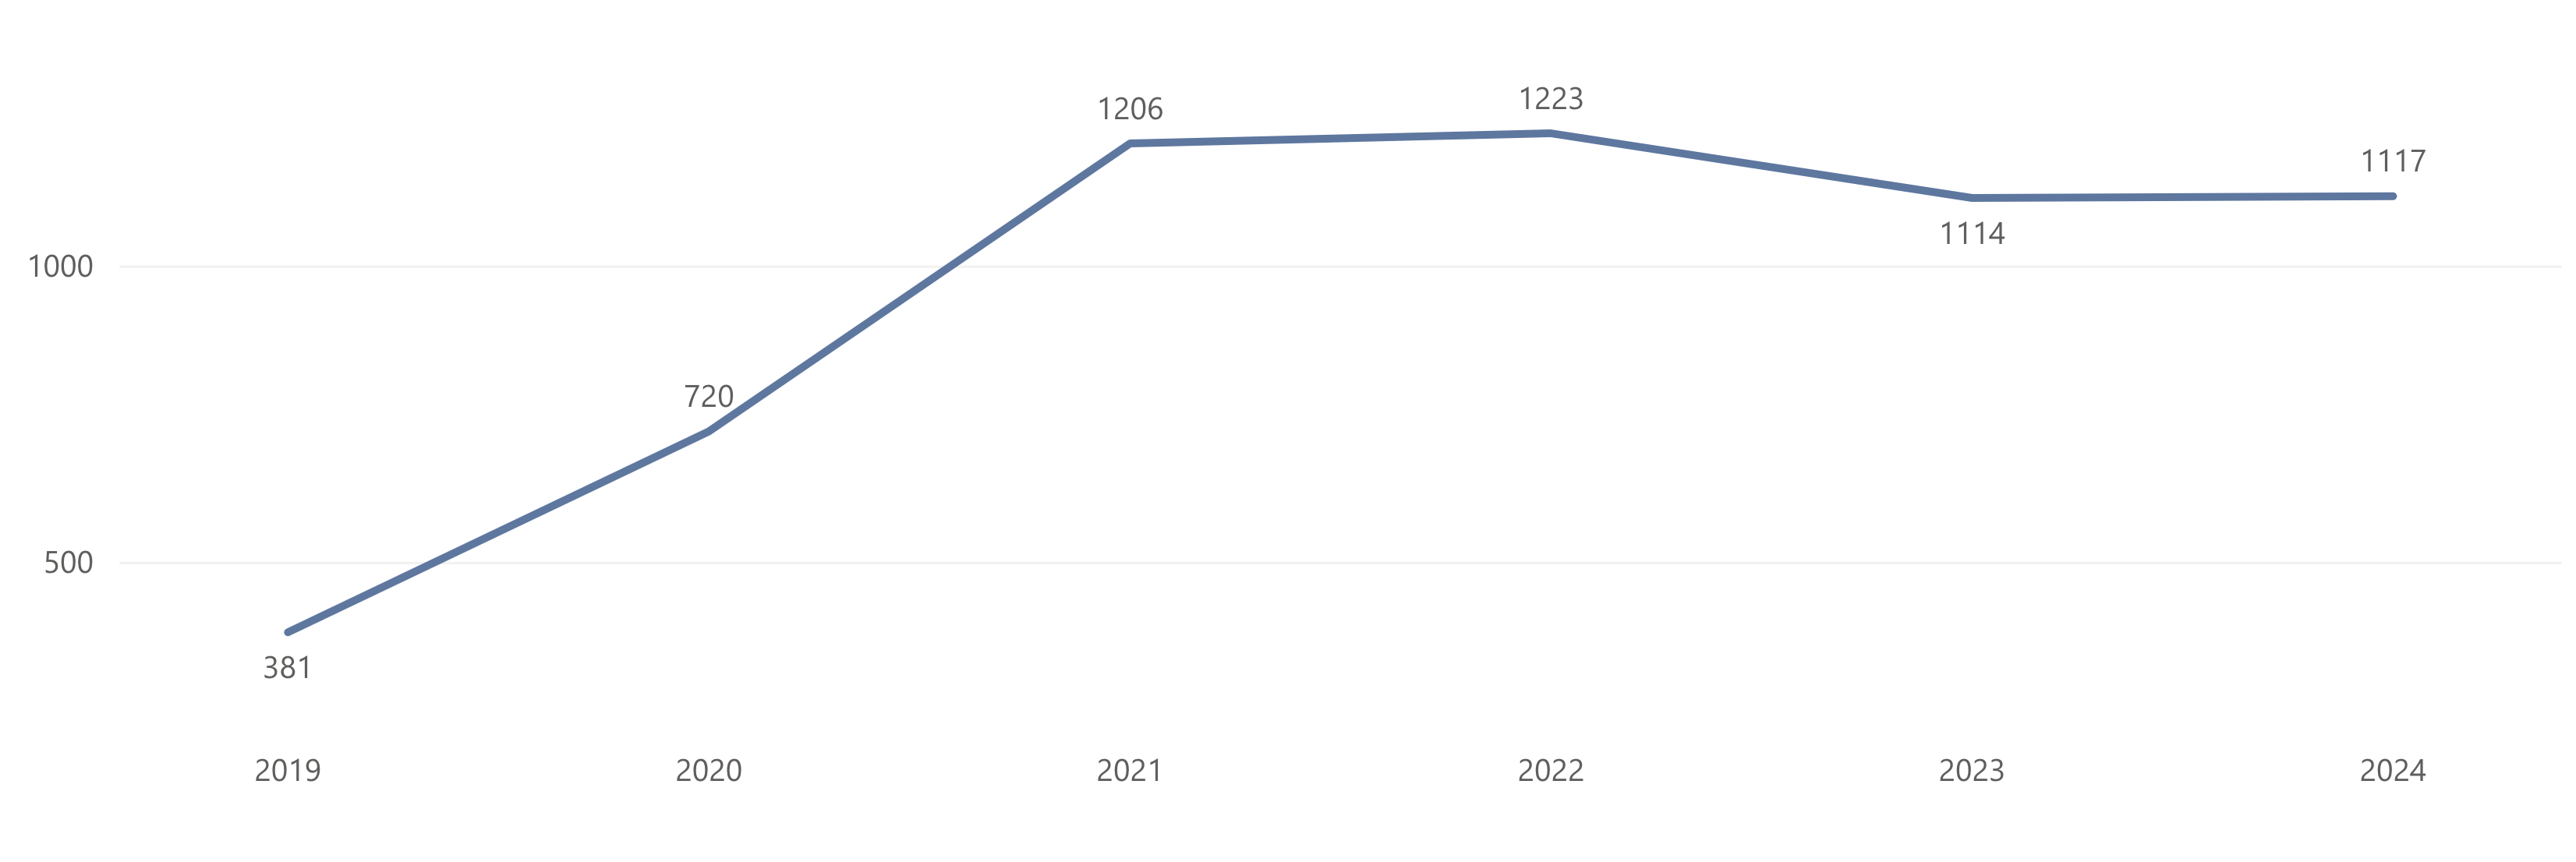 bar chart showing trends in spring enrollment over the past 6 years: 381 in spring 2019, 720 in spring 2020, 1206 in spring 2021, 1223 in spring 2022, 1114 in spring 2023, and 1117 in spring 2024